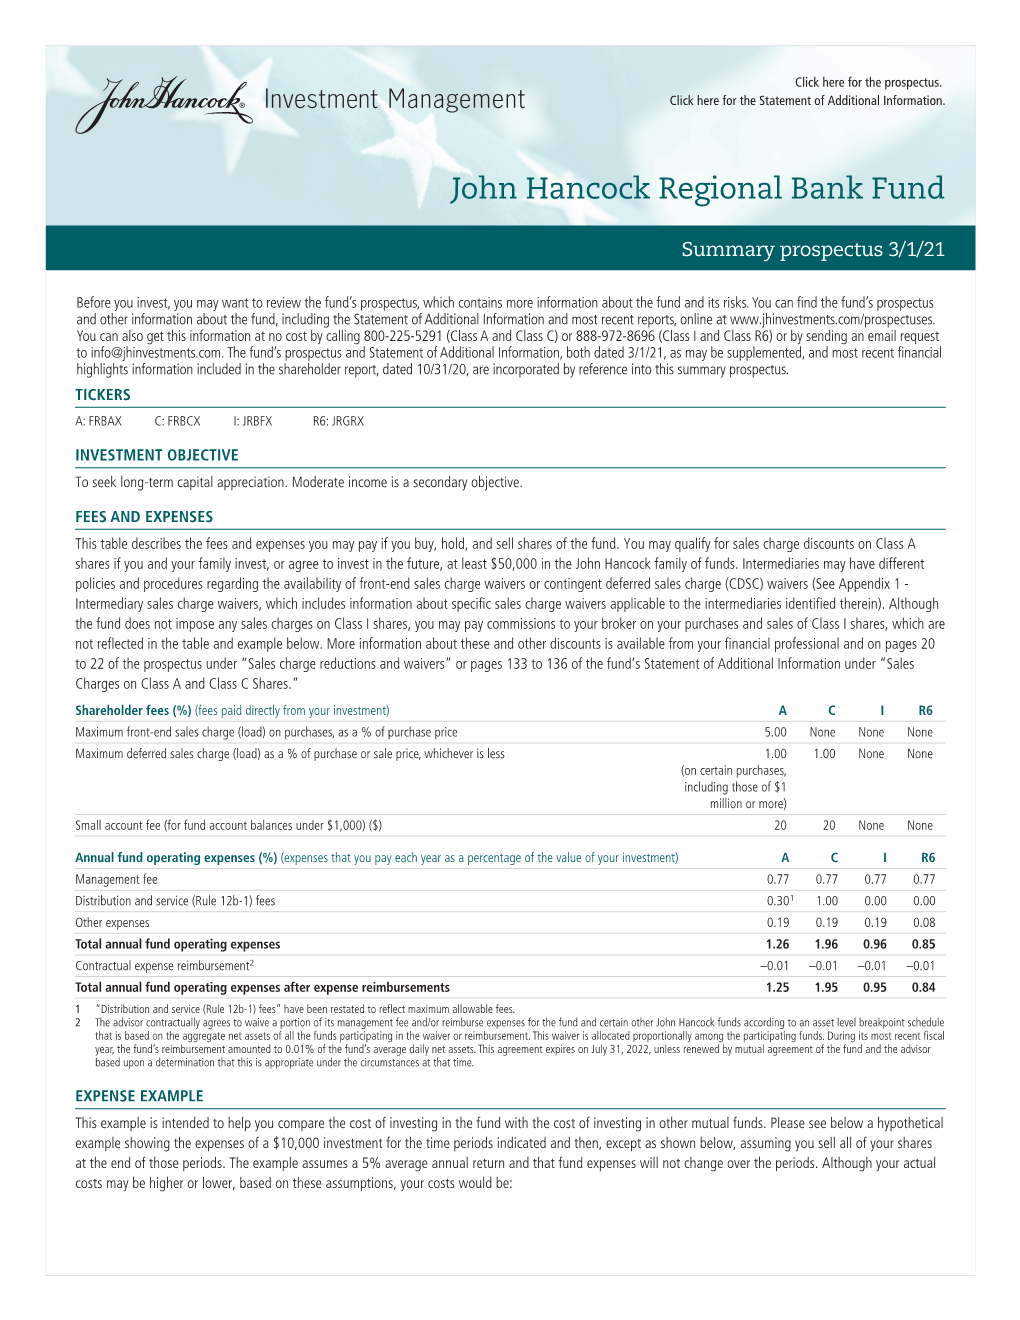 John Hancock Regional Bank Fund